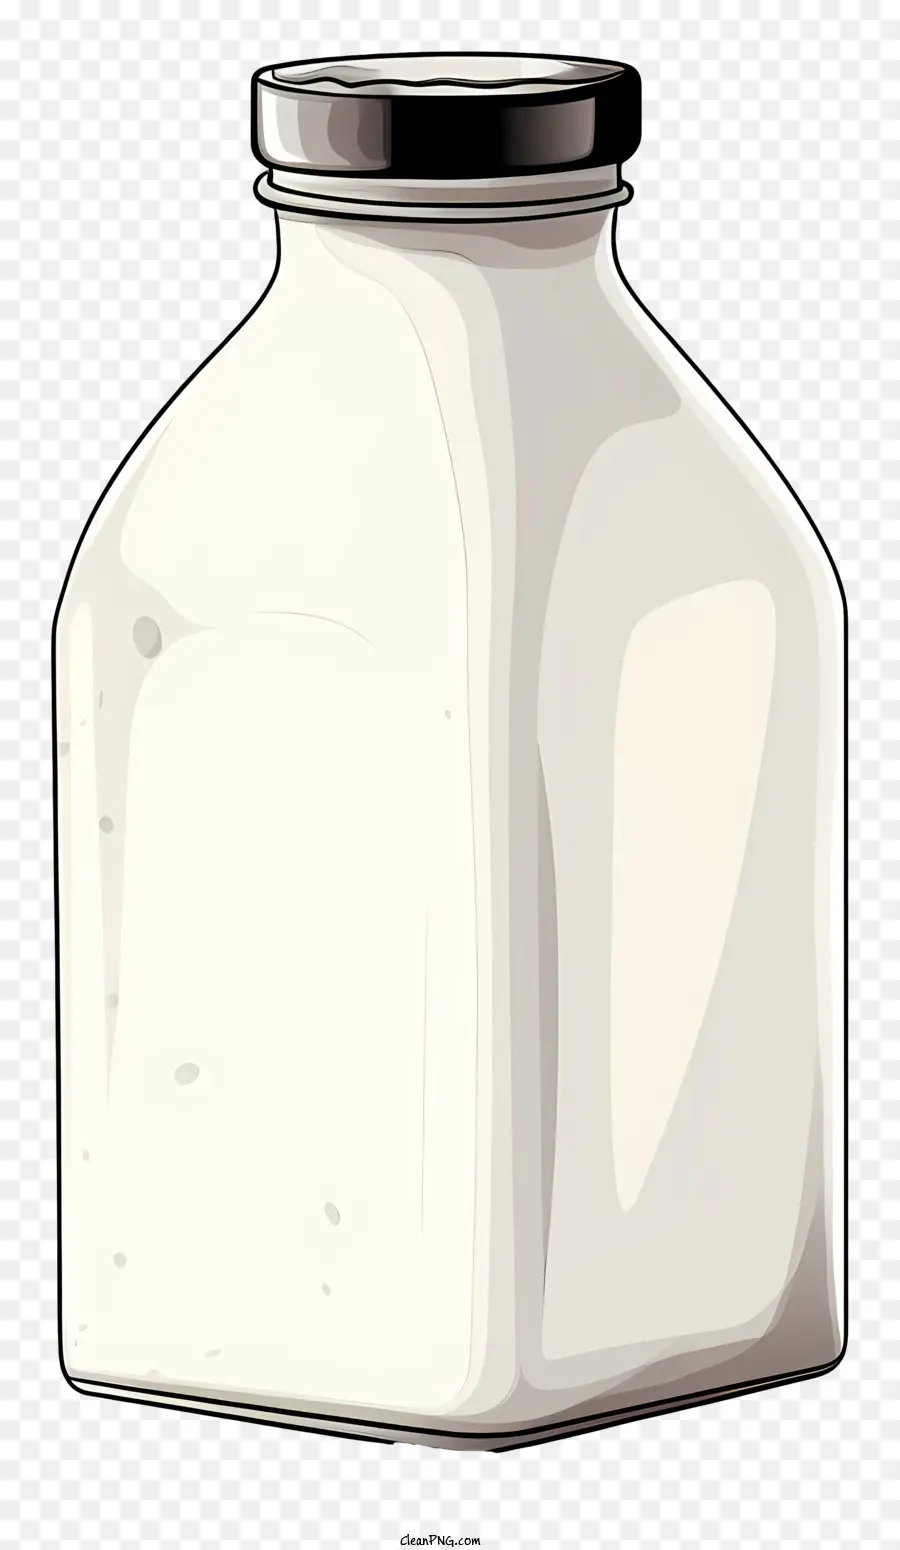 glass jar clear liquid cylindrical shape black cap rubber gasket